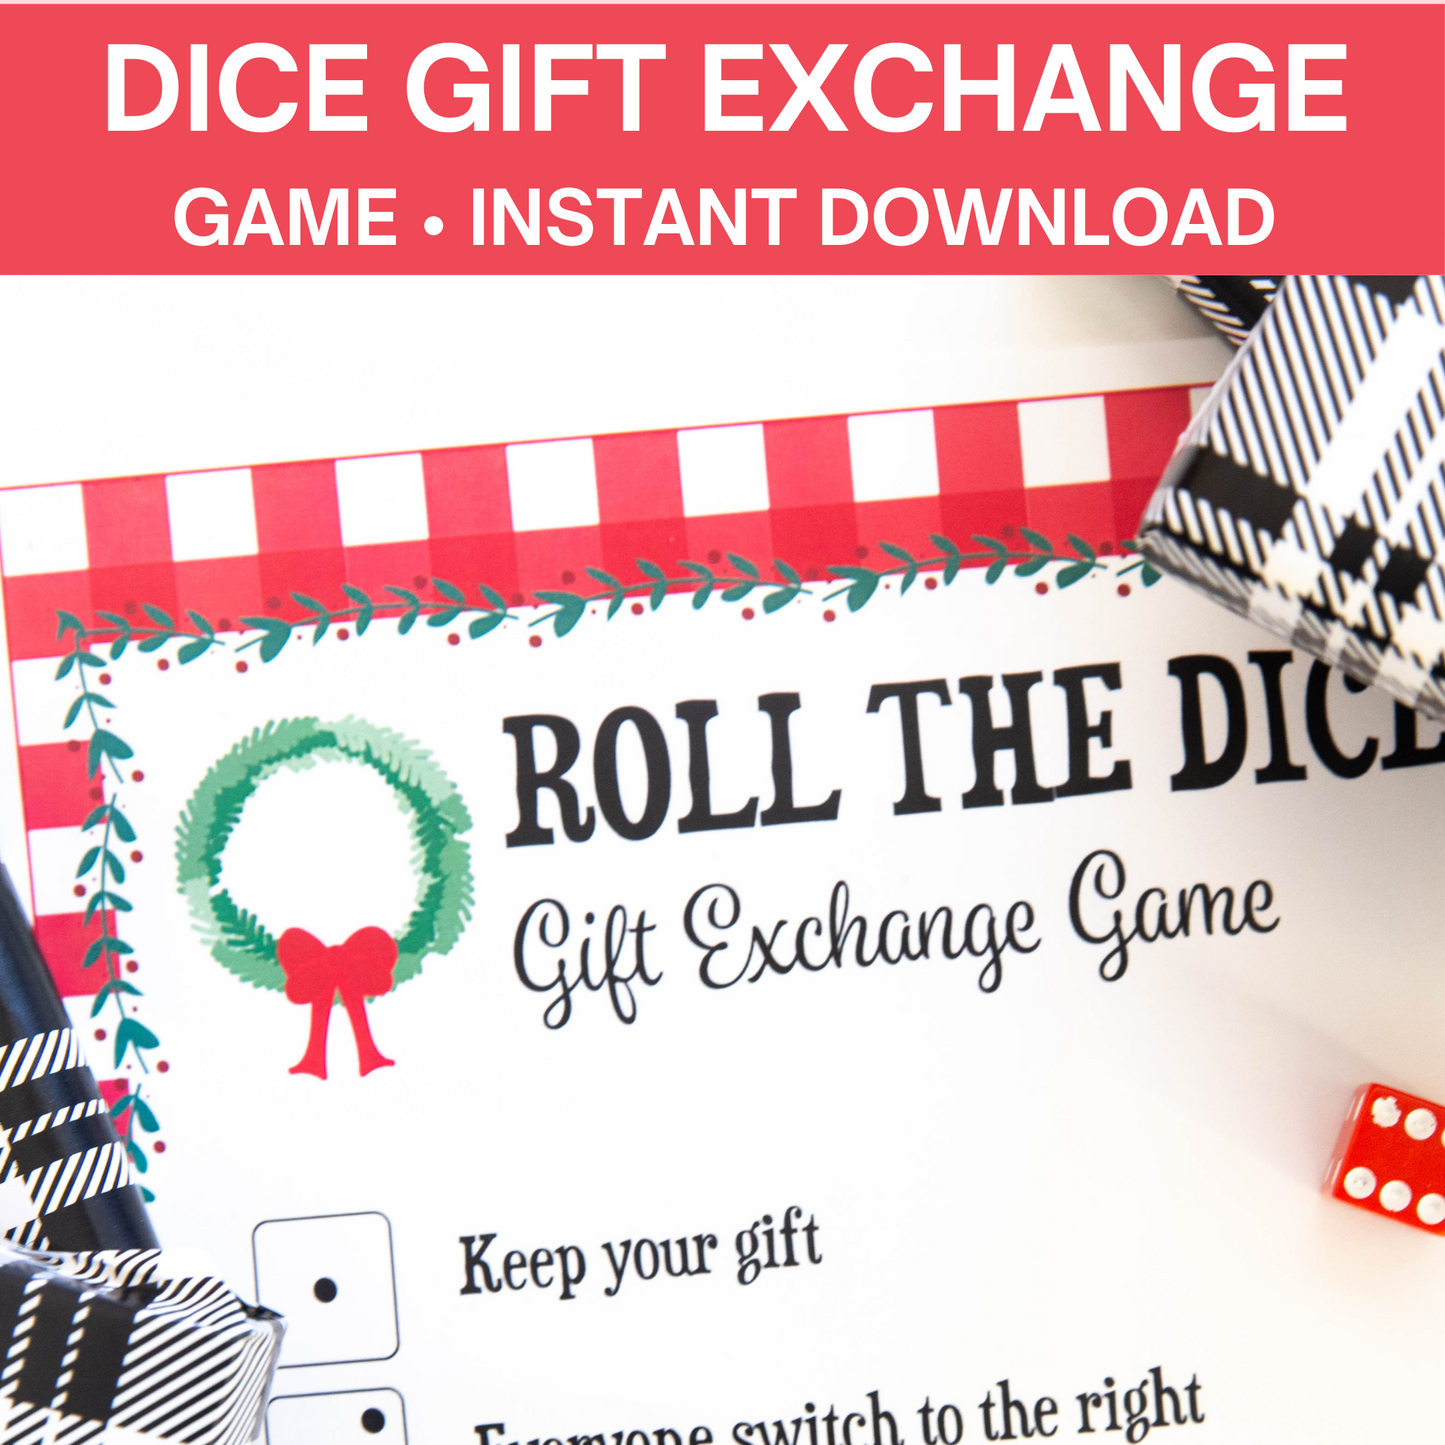 24 Christmas Games Bargain Bundle- ($40 value!)